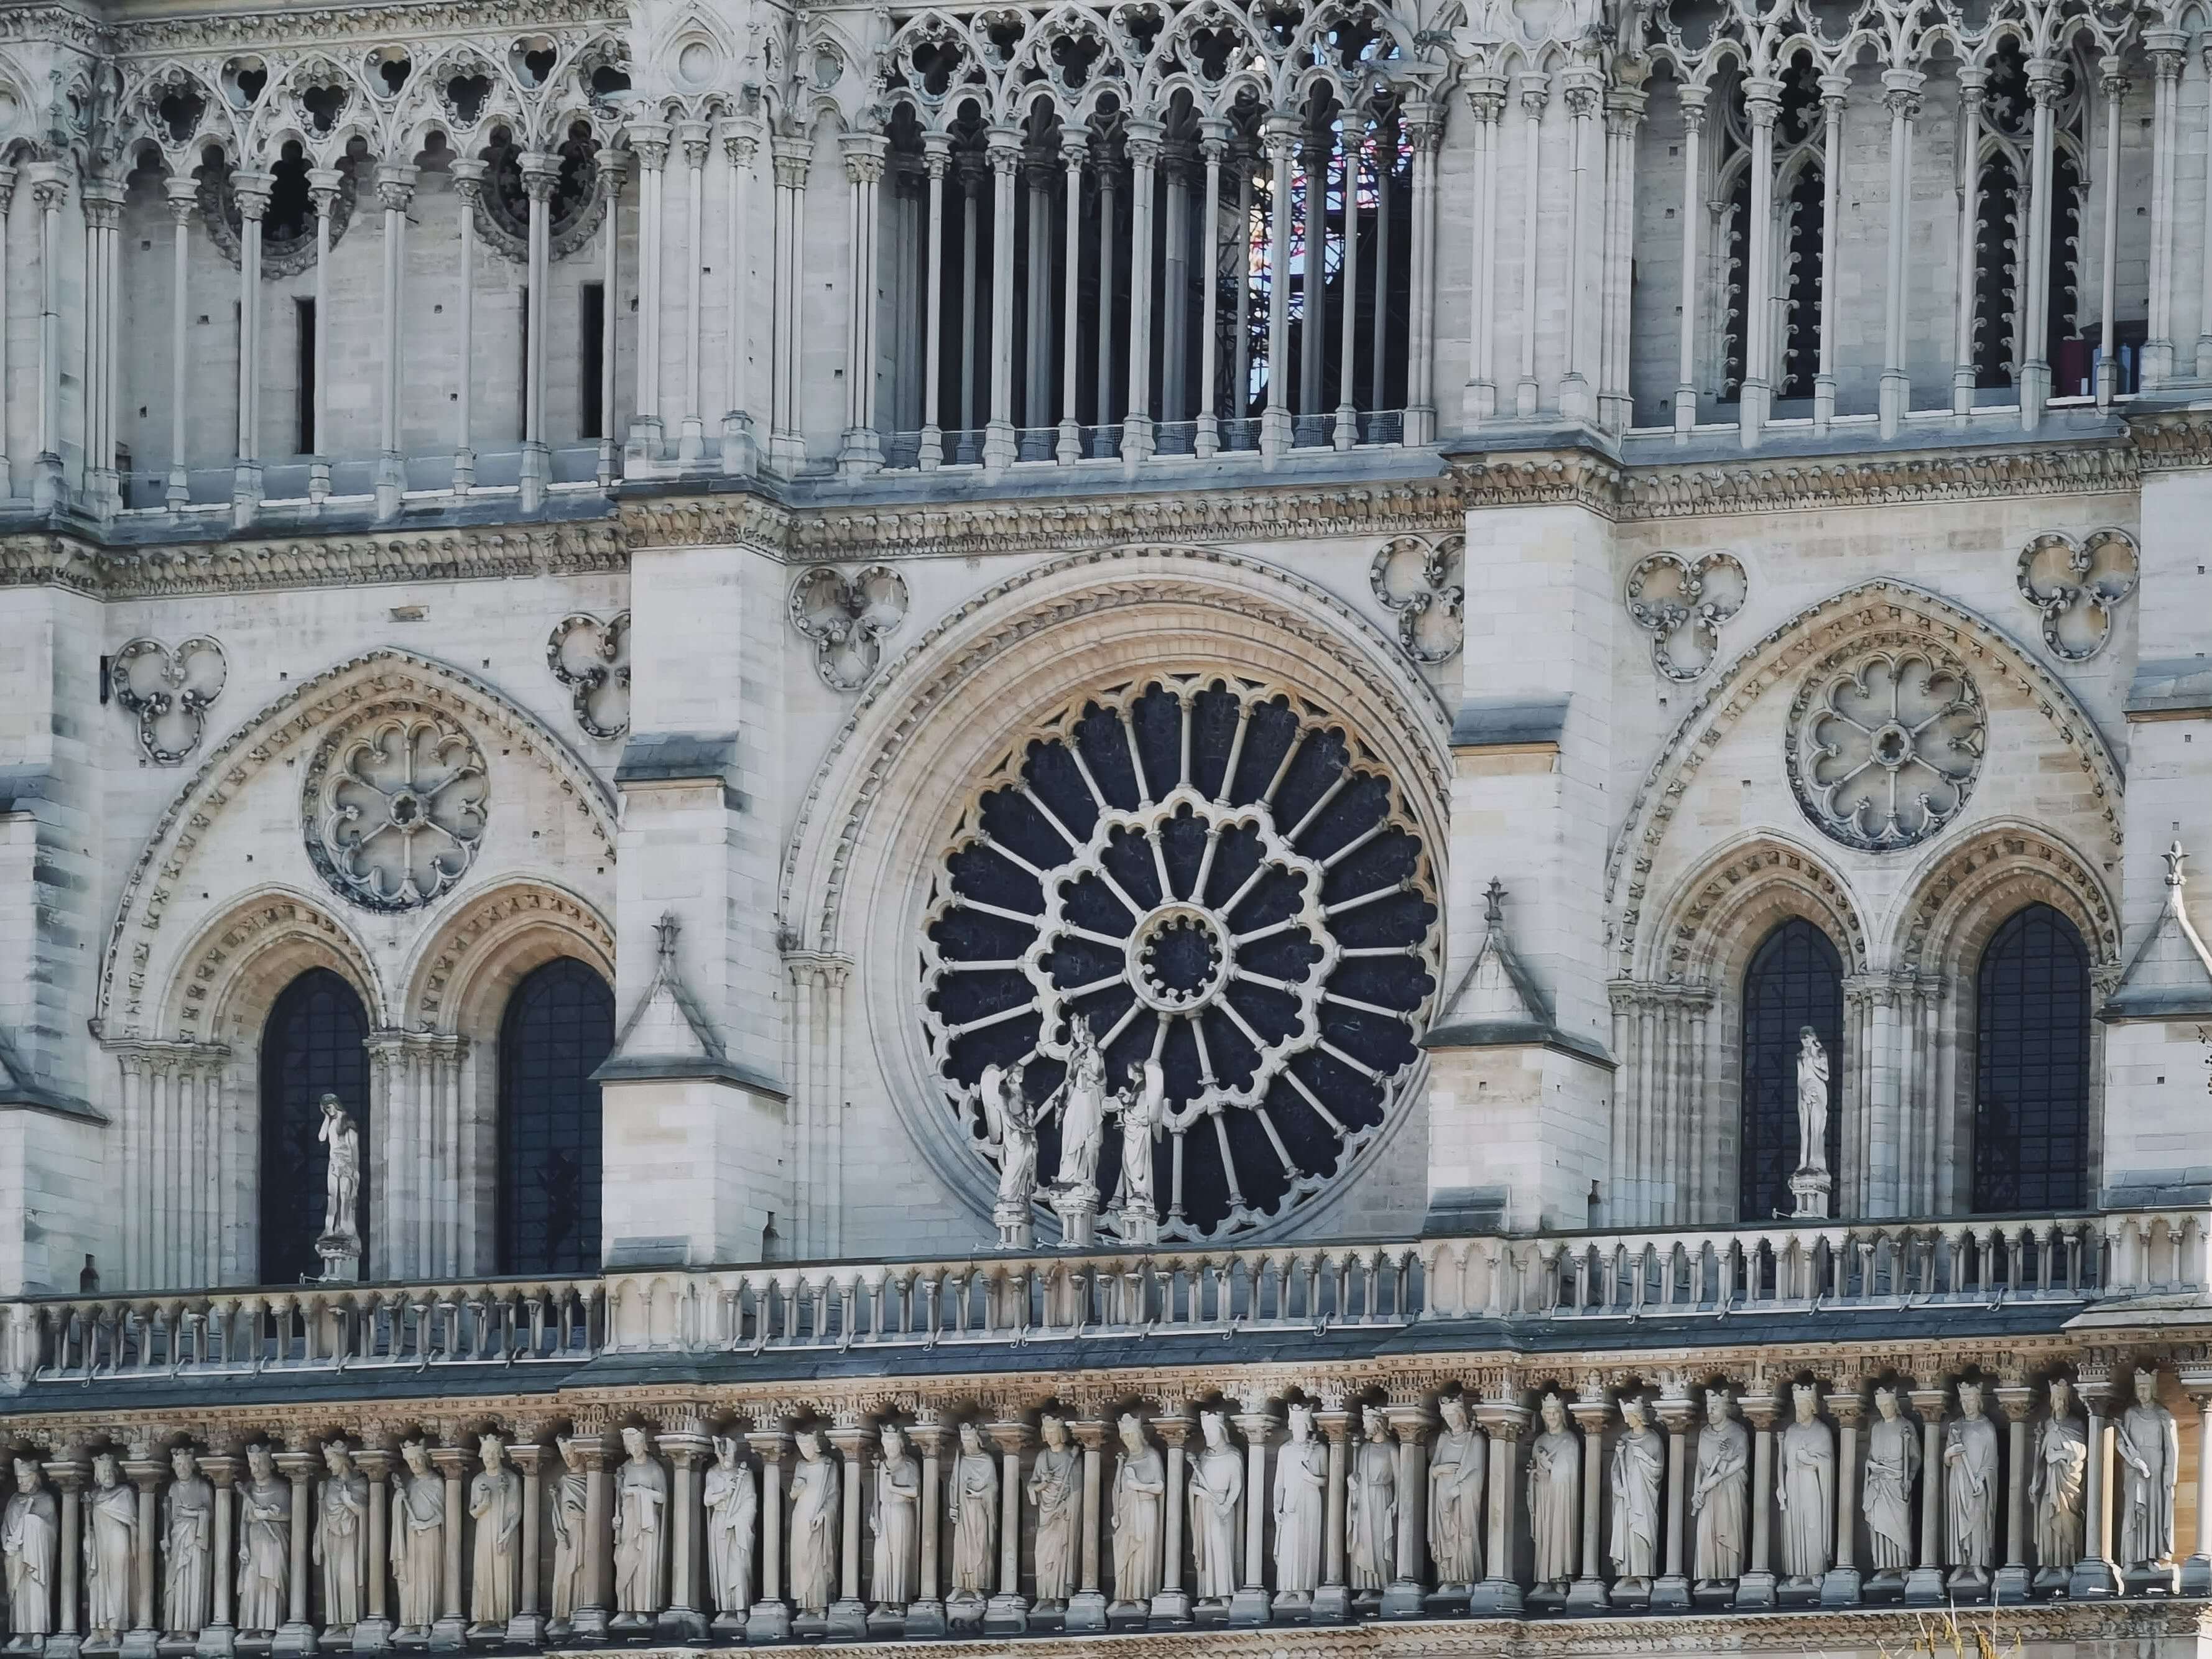 Notre Dame Cathedral – Paris, France